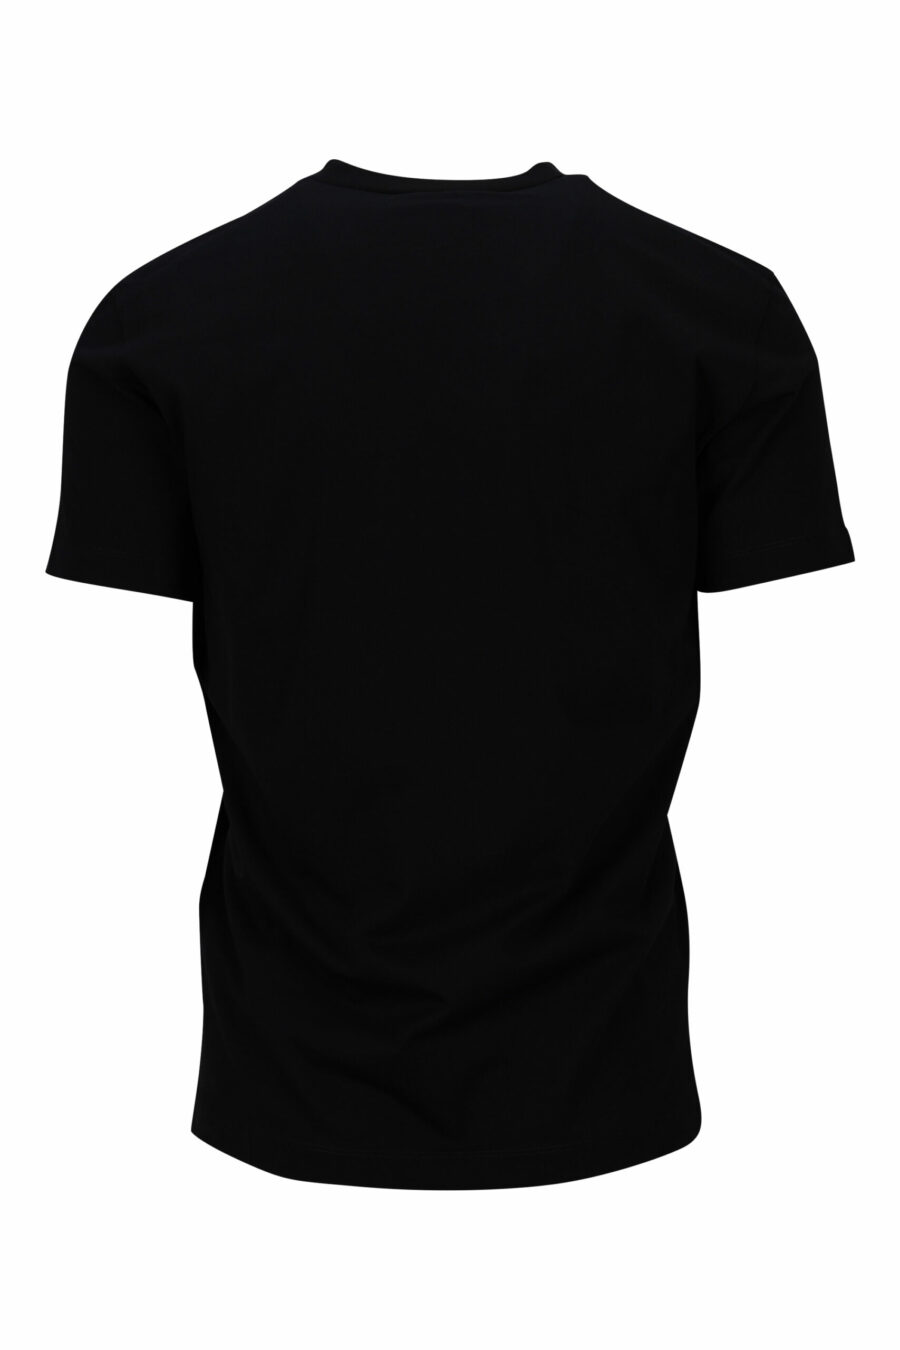 Black T-shirt with maxilogo "ceresio 9 milano" - 8054148504984 1 scaled